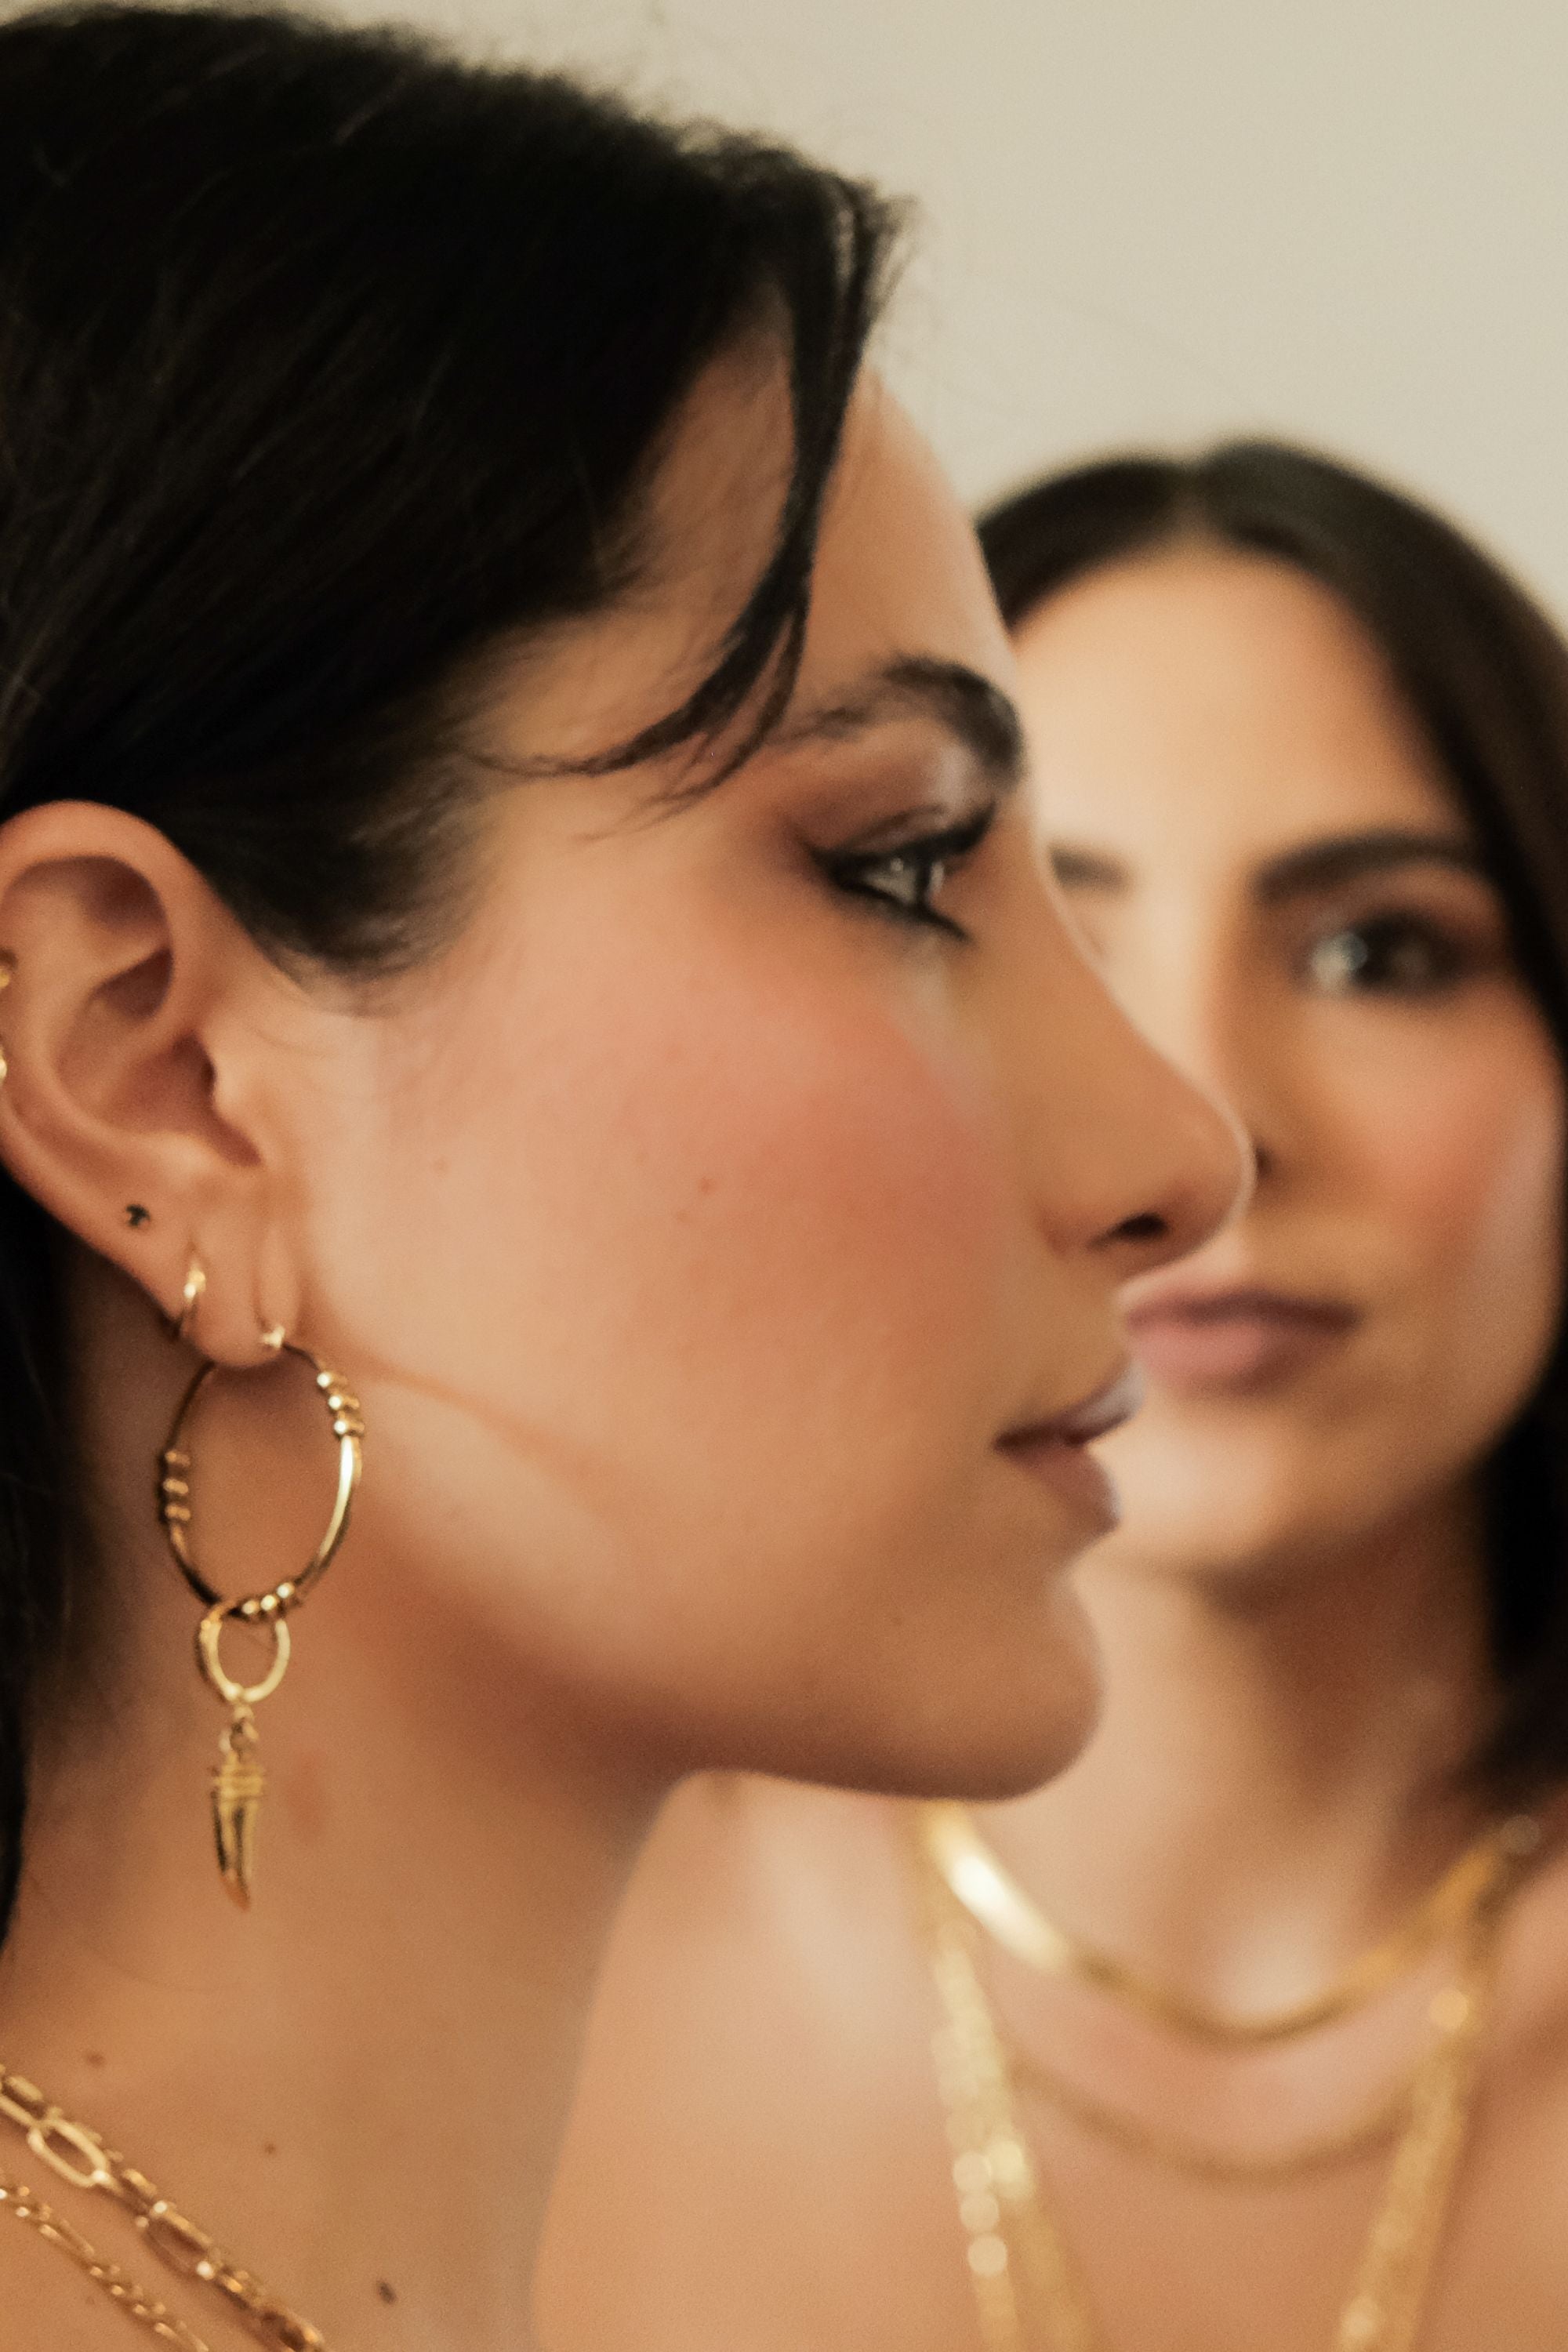 Mini Panthera Gold earrings